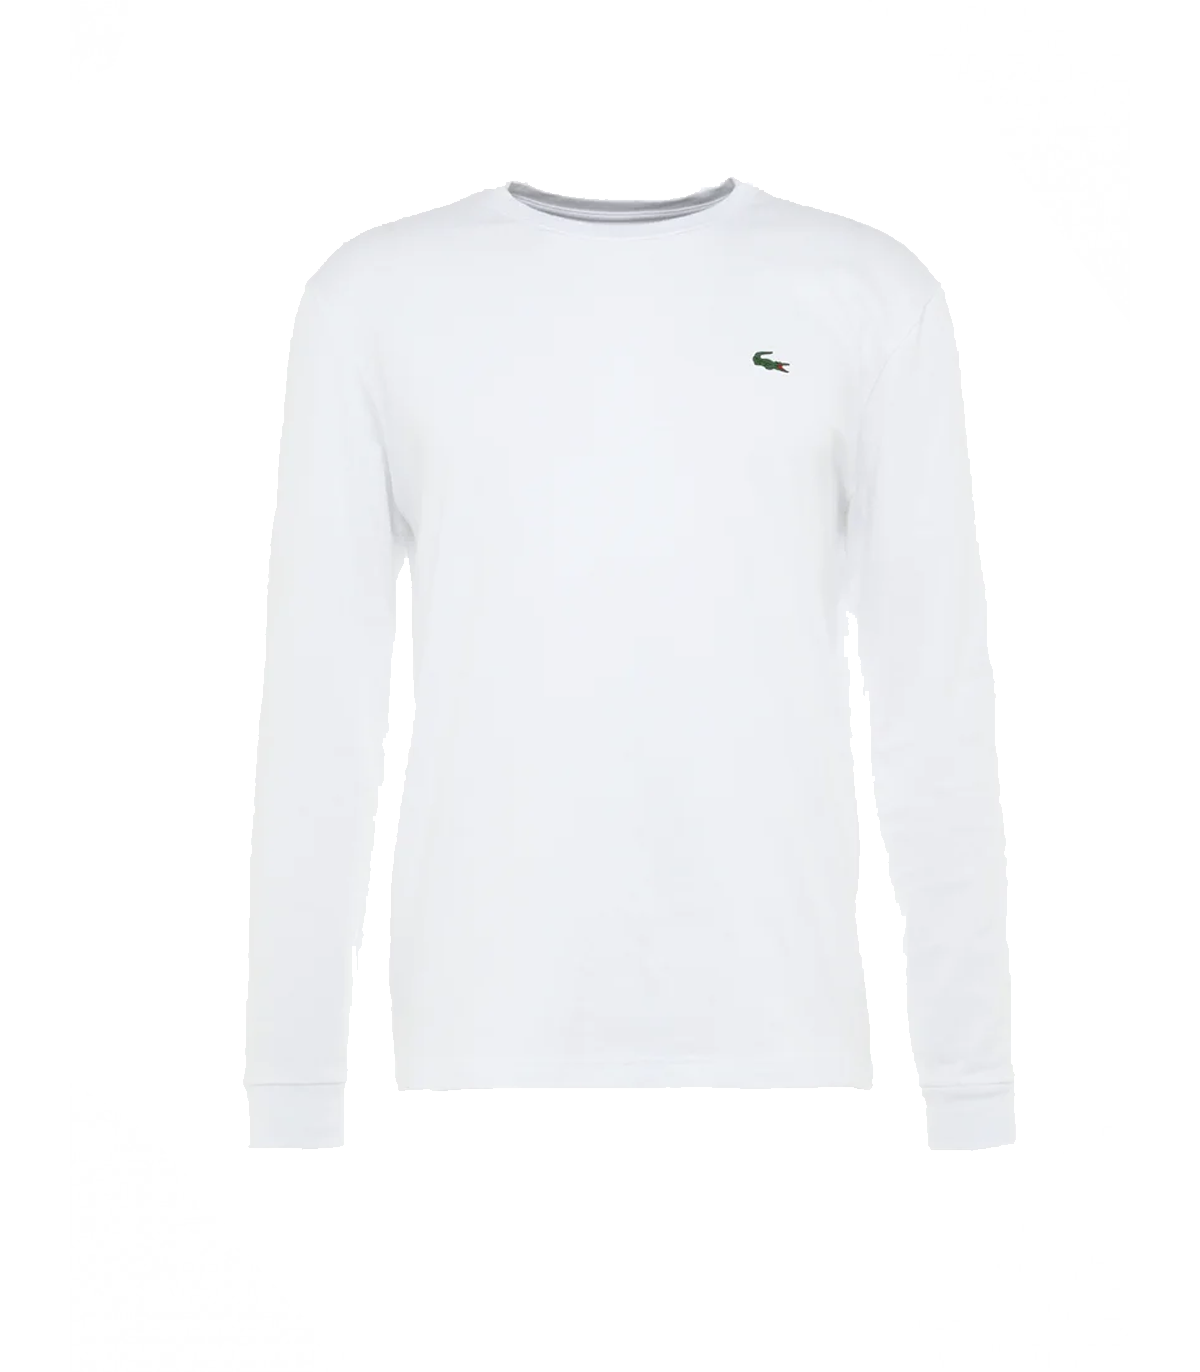 Lacoste - Camiseta Sport Ultra DRY - Blanco